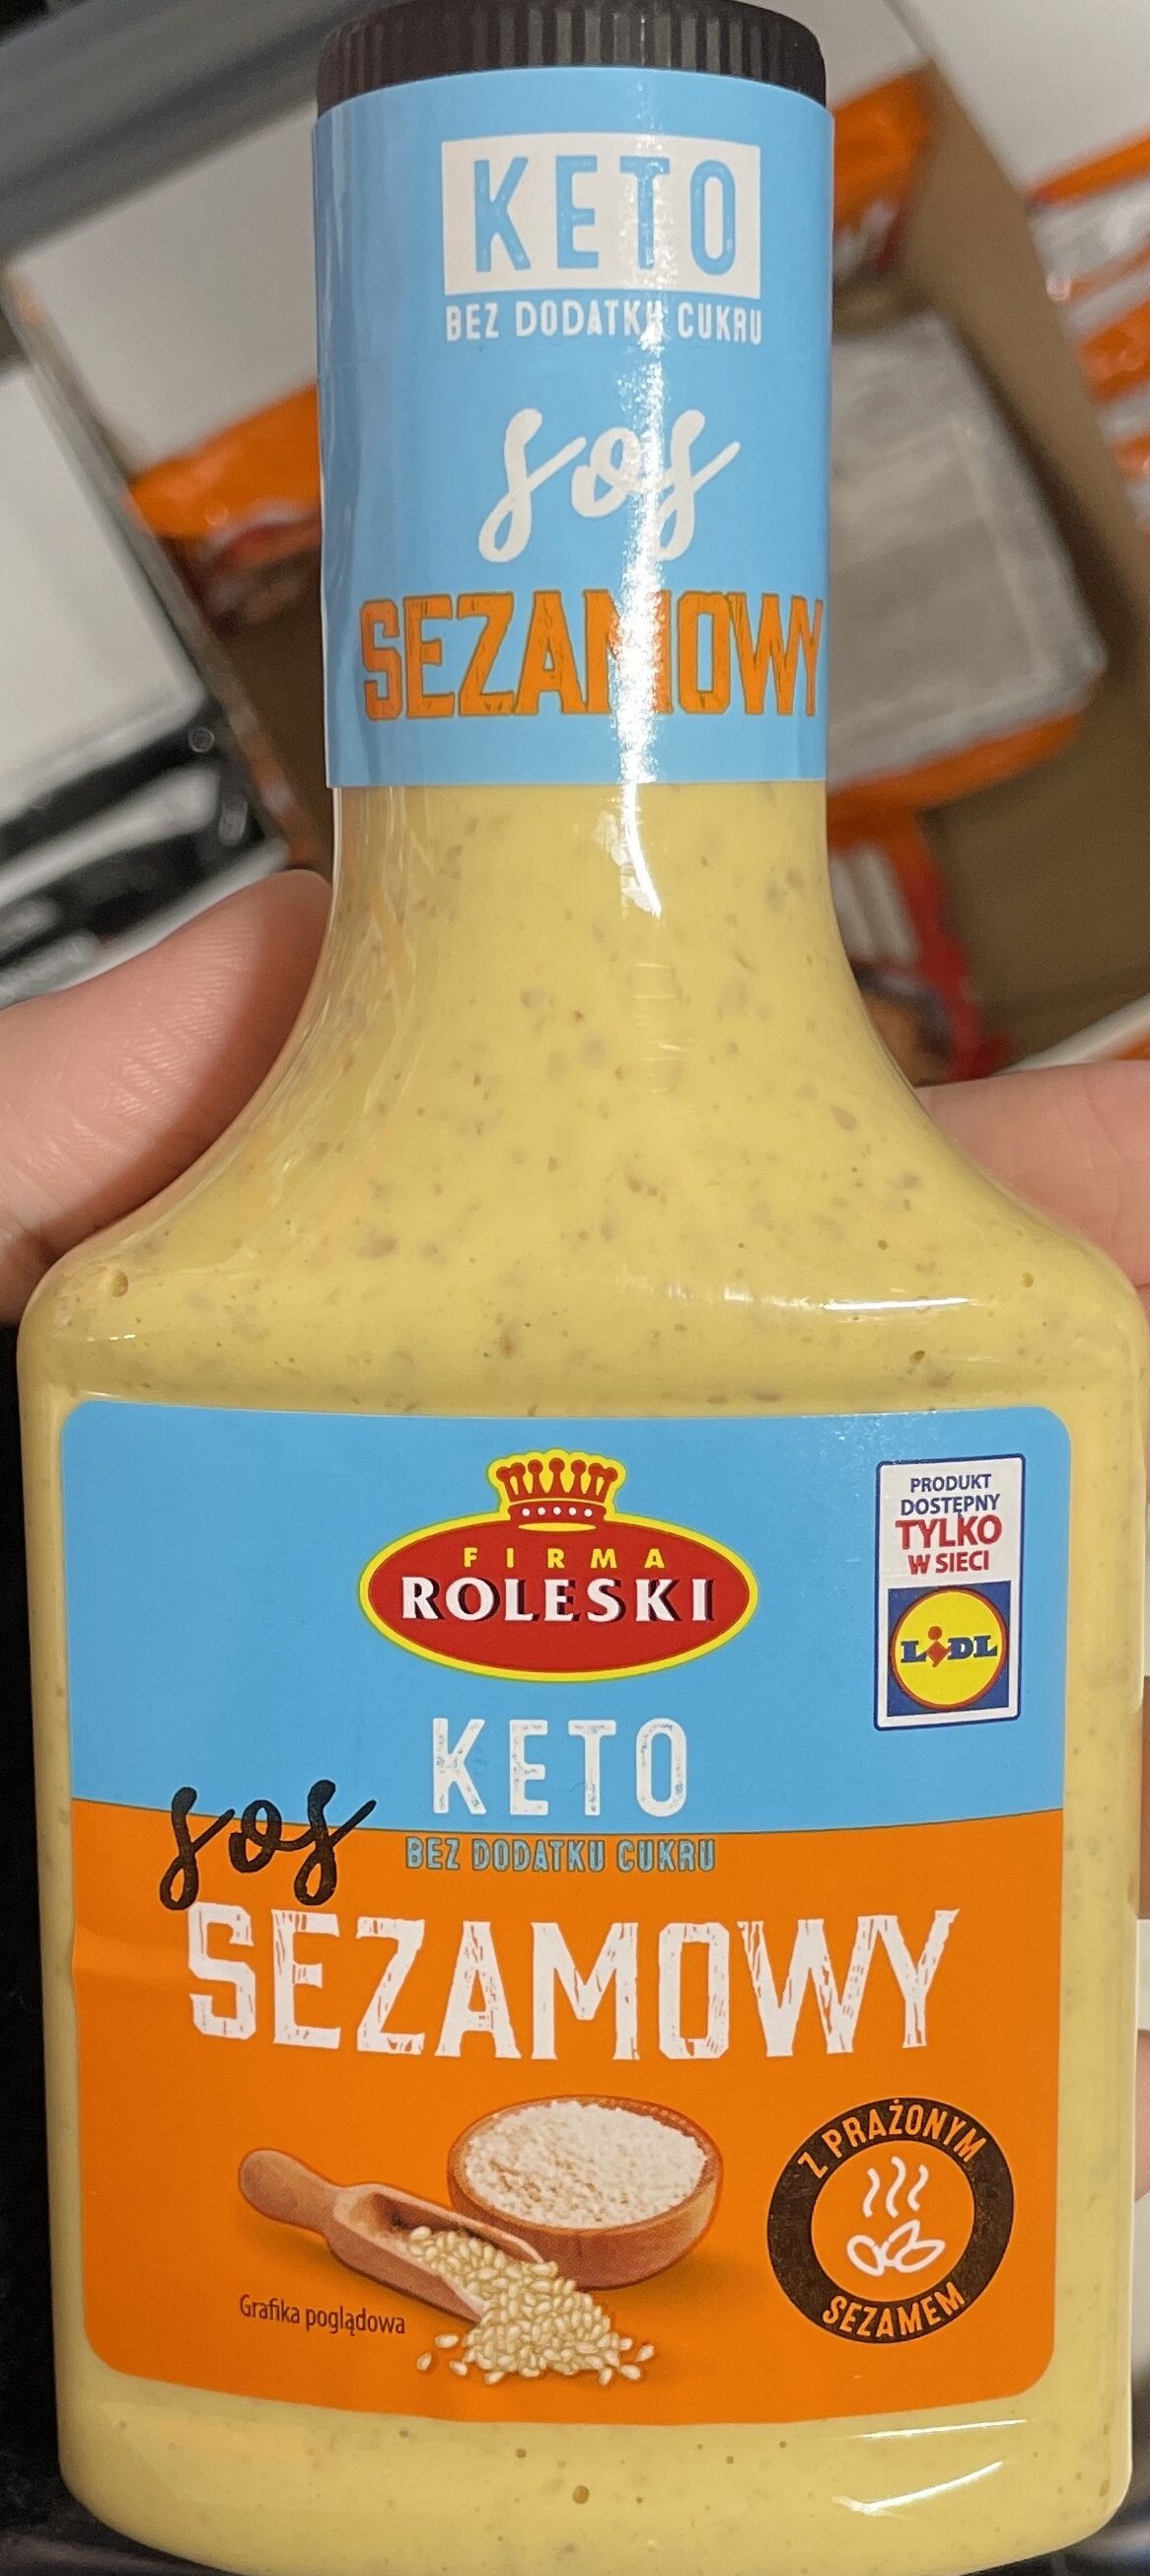 Keto sos sezamowy - Product - pl